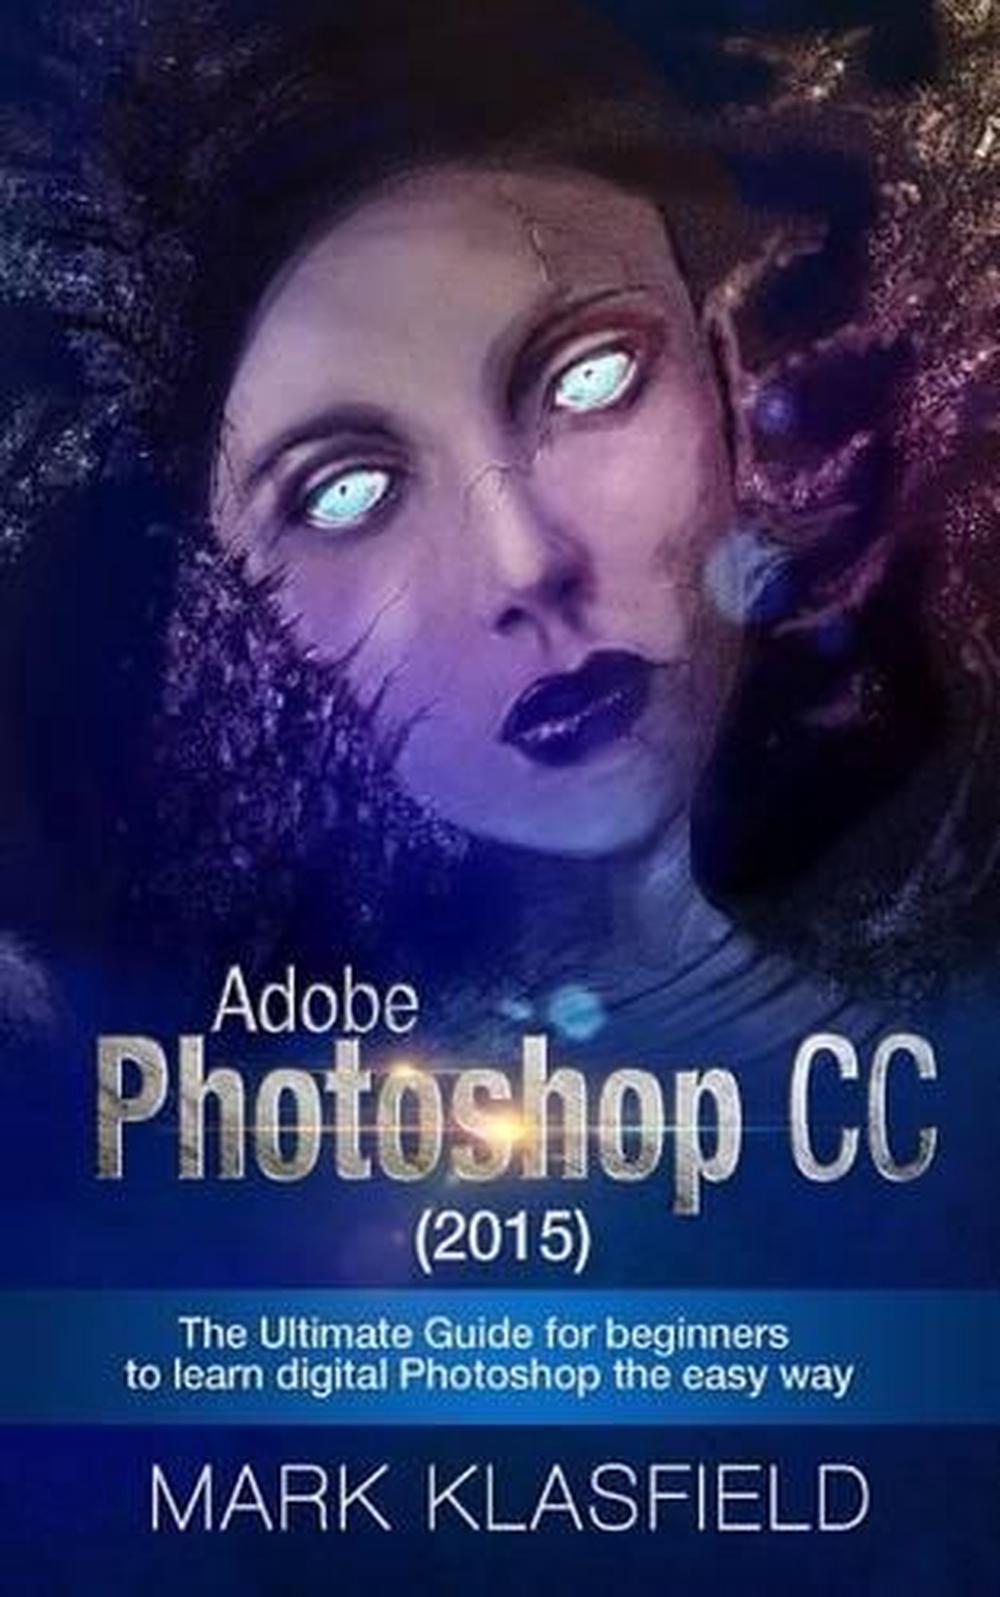 adobe photoshop cc 2015 ebook free download